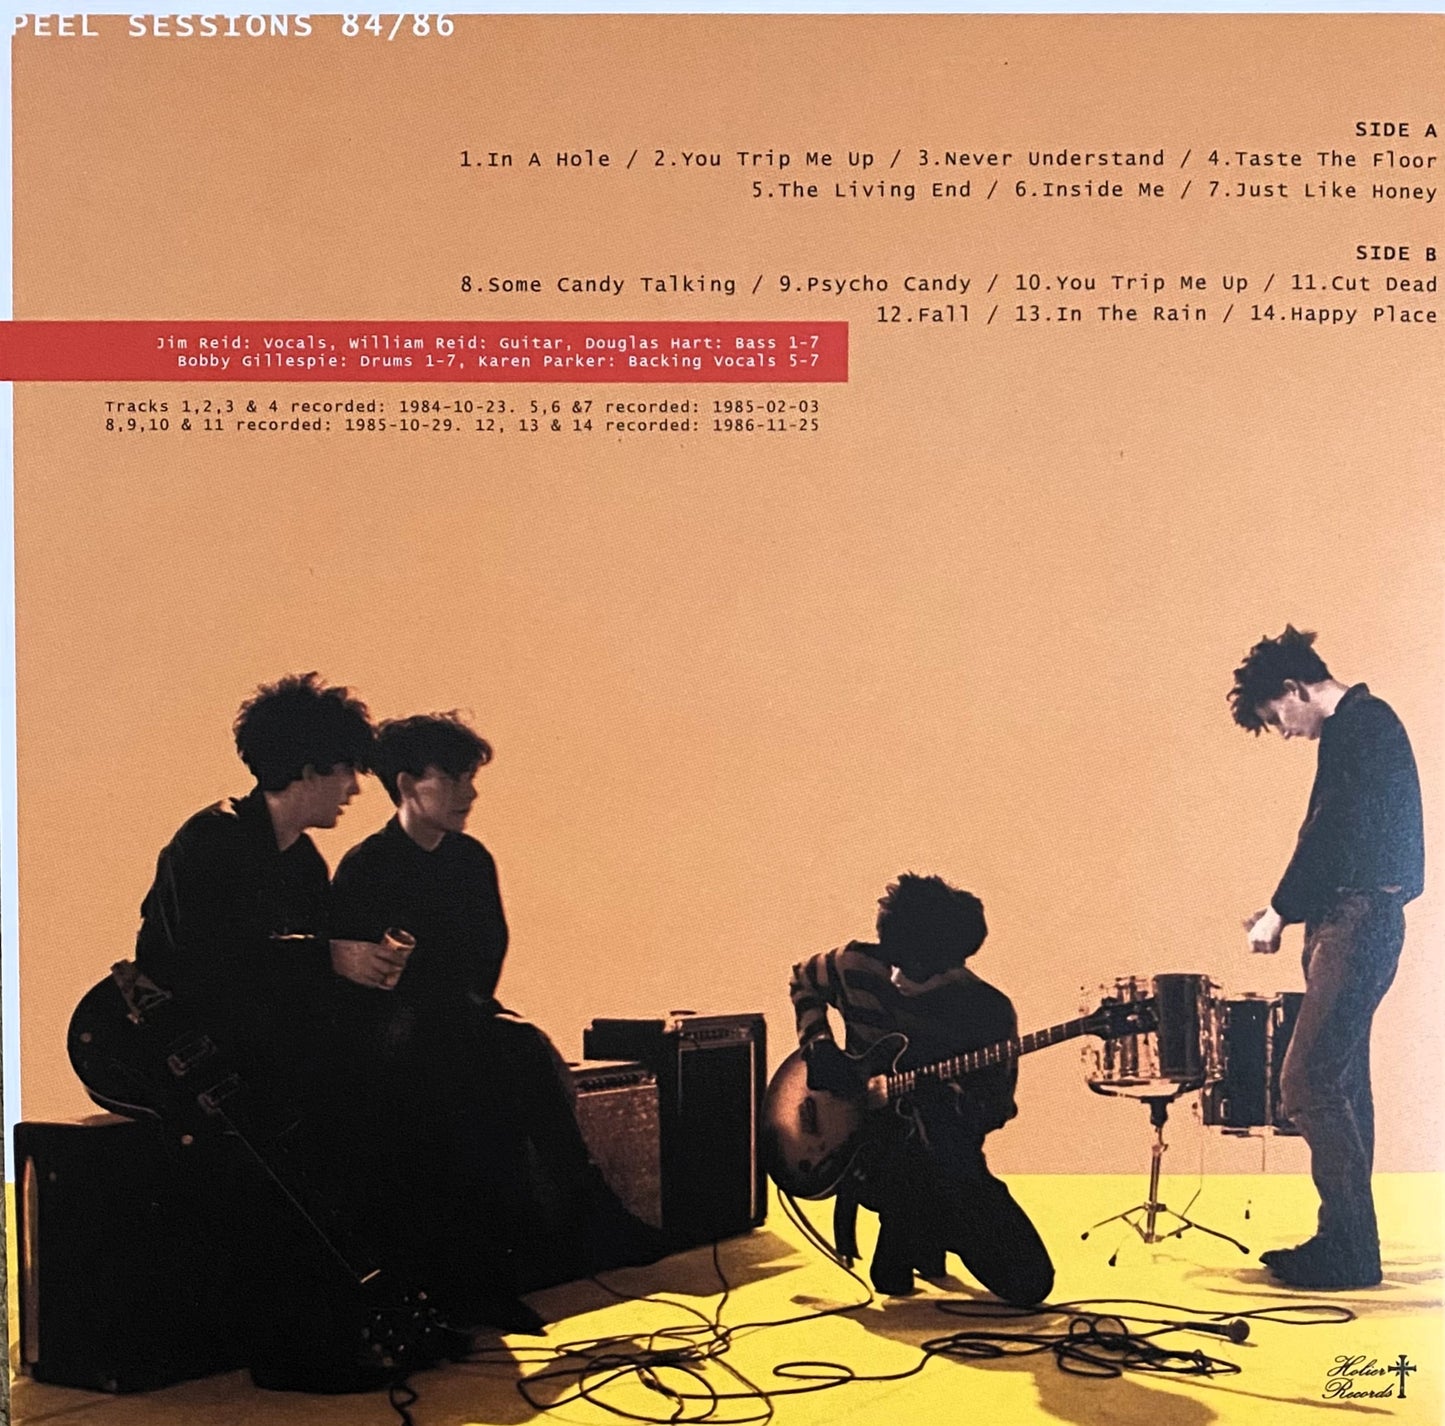 JESUS & MARY CHAIN – Peel Sessions 84/86 LP